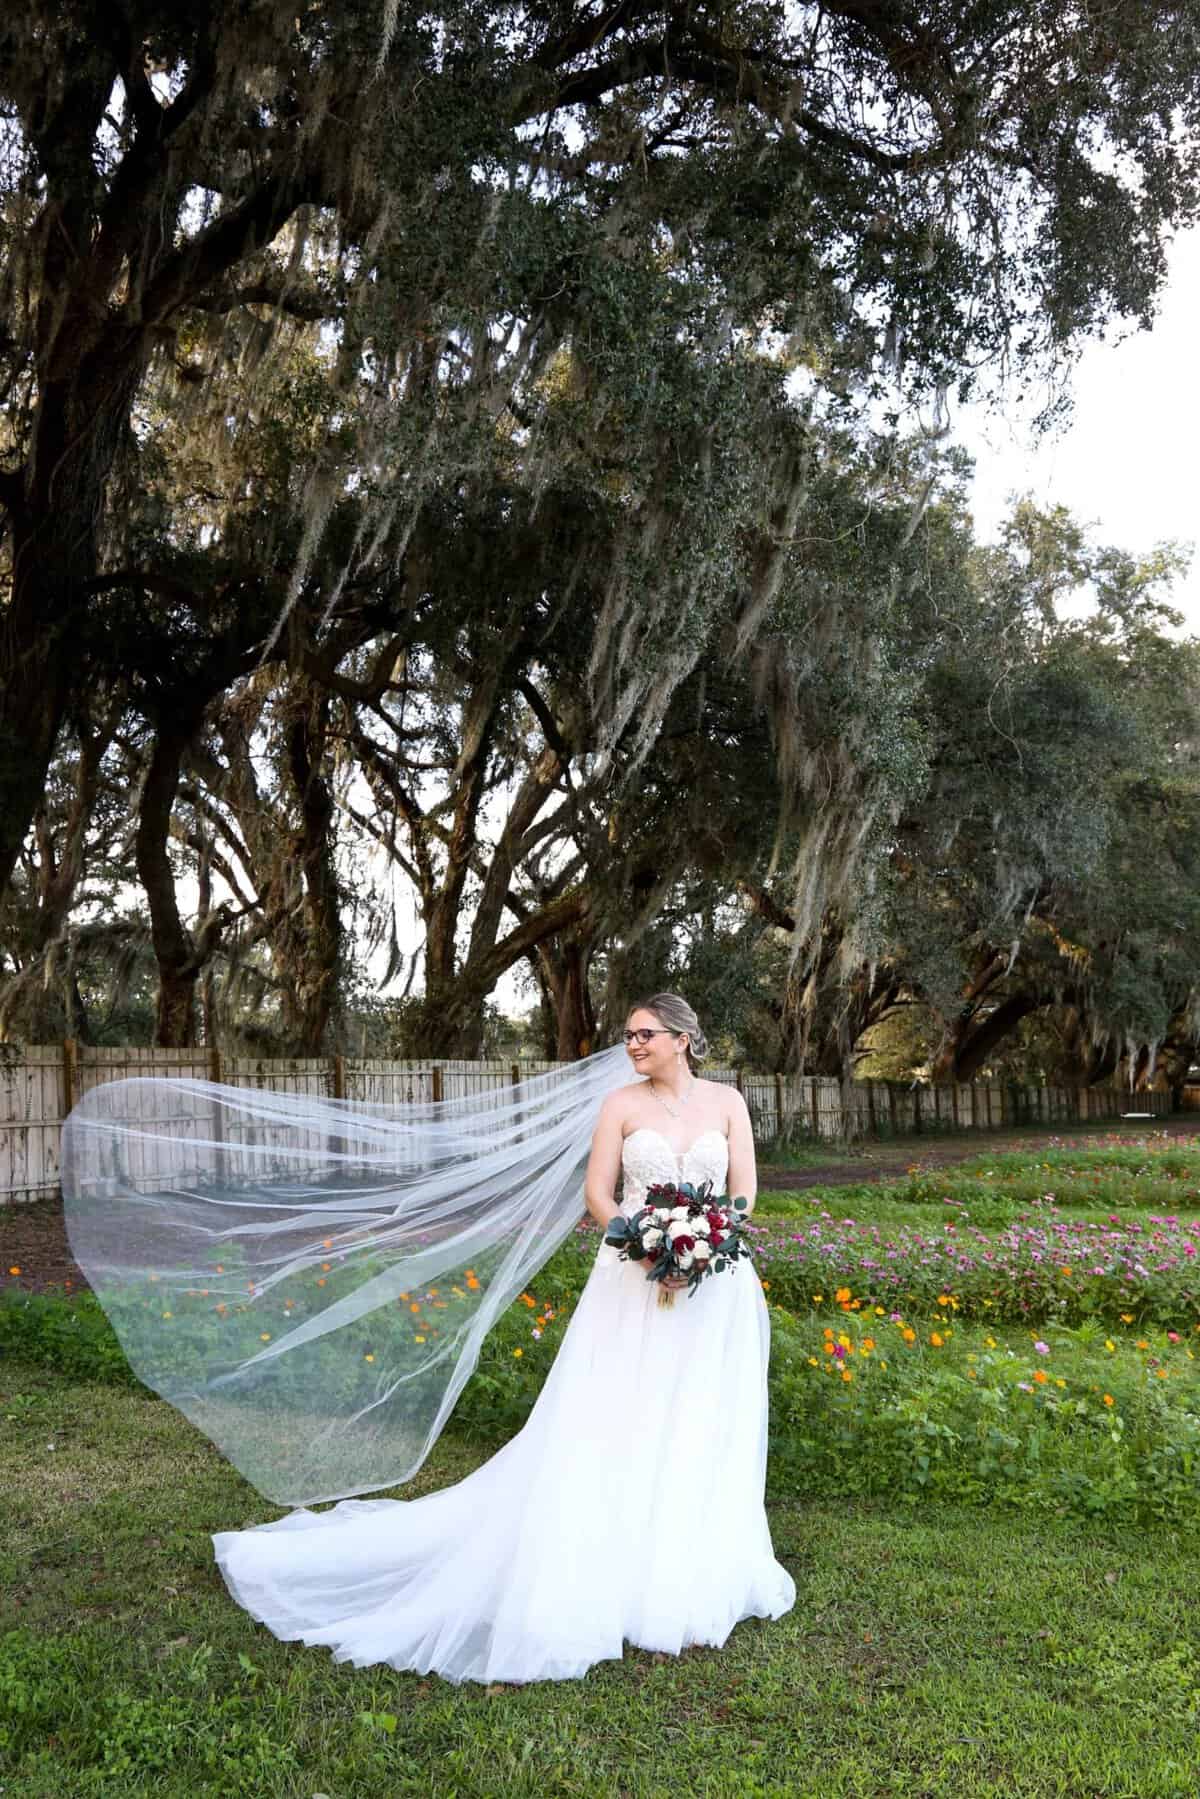 Christmas Wedding Theme - Just Marry Weddings - Regina Hyman Photography - Bride